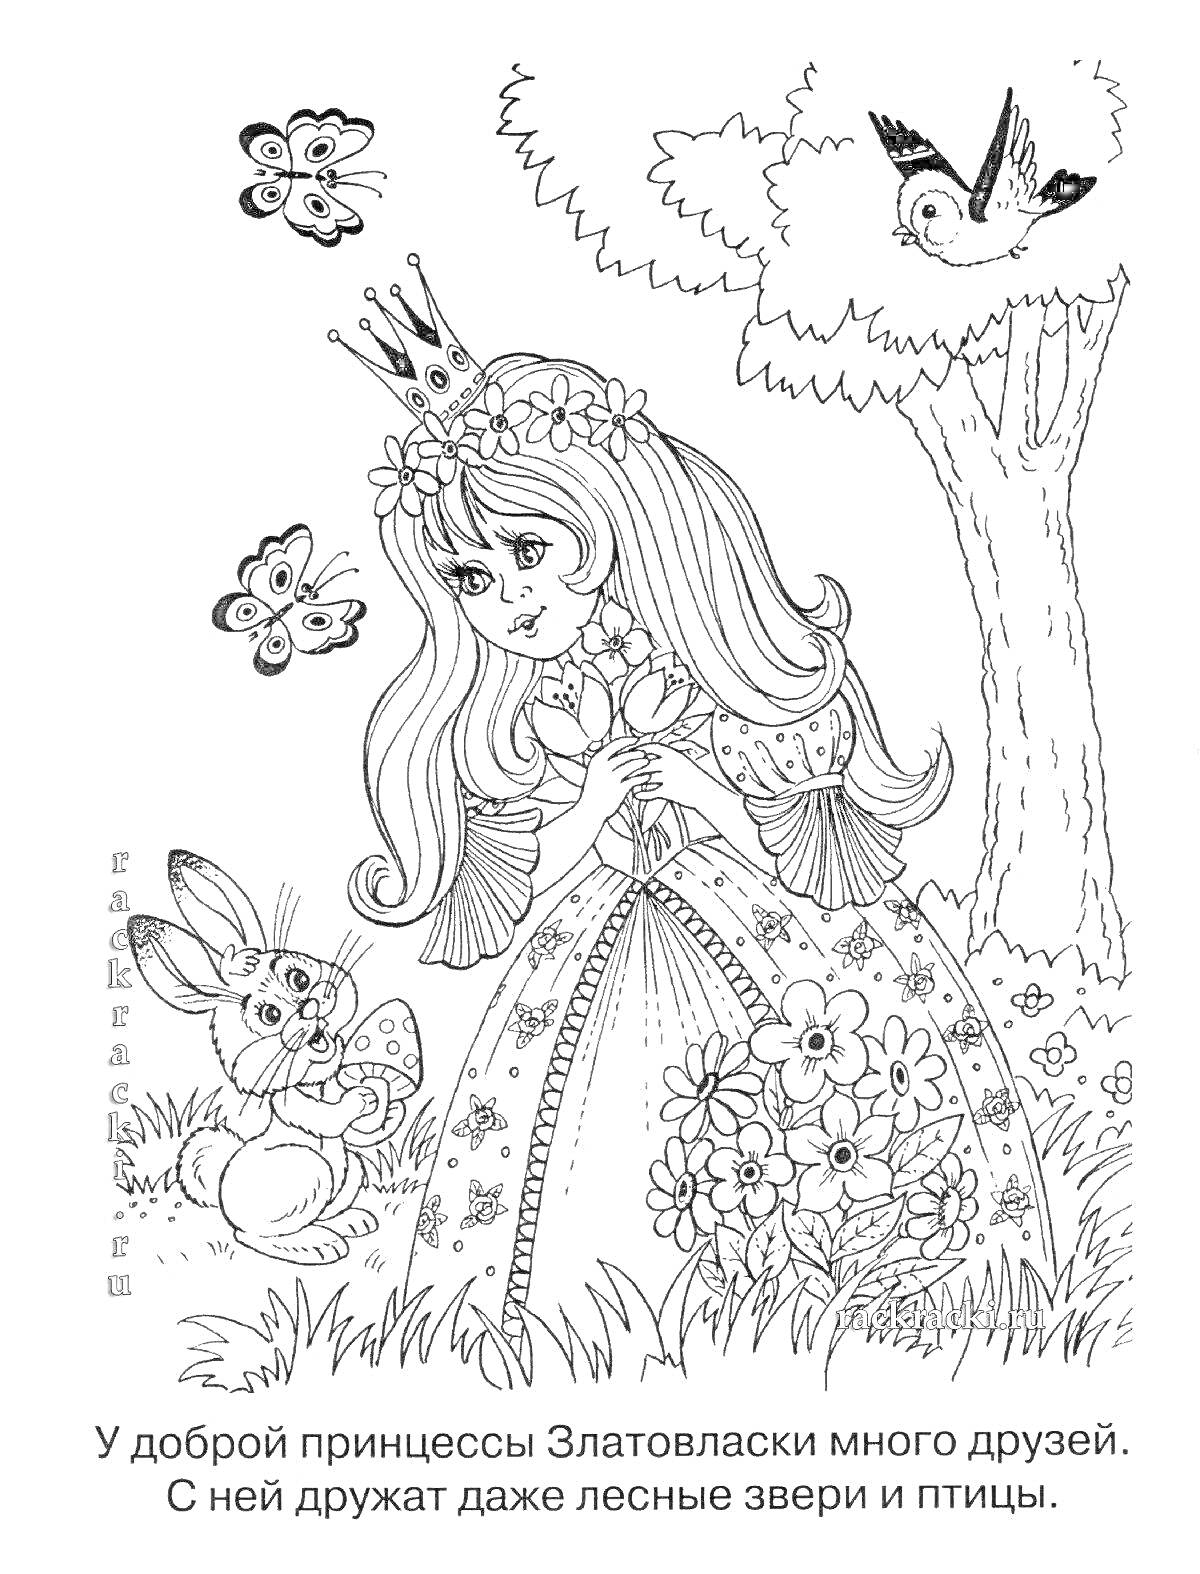 На раскраске изображено: Принцесса, Златовласка, Друзья, Заяц, Птица, Цветы, Лесные животные